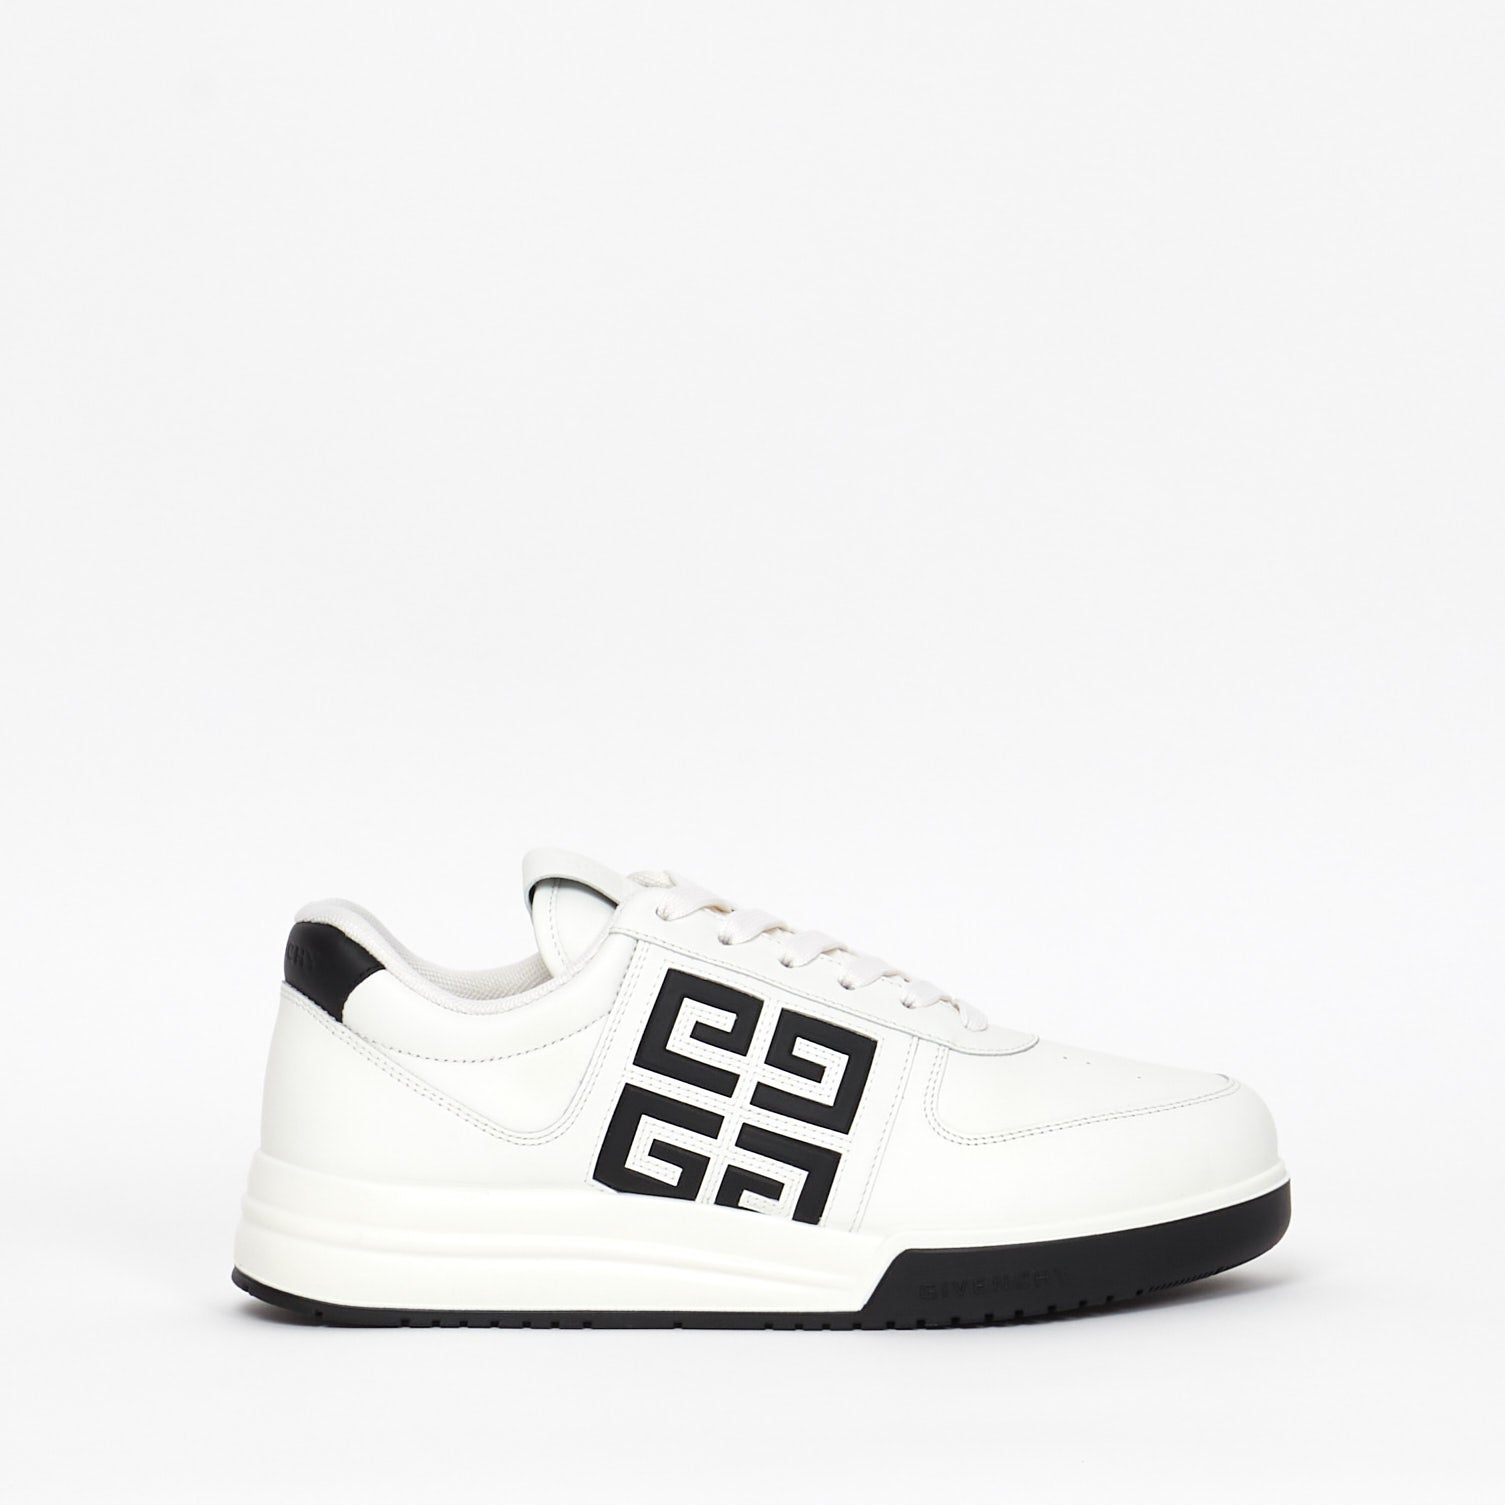 Sneakers Givenchy G4 Cuir Blanc et Noir